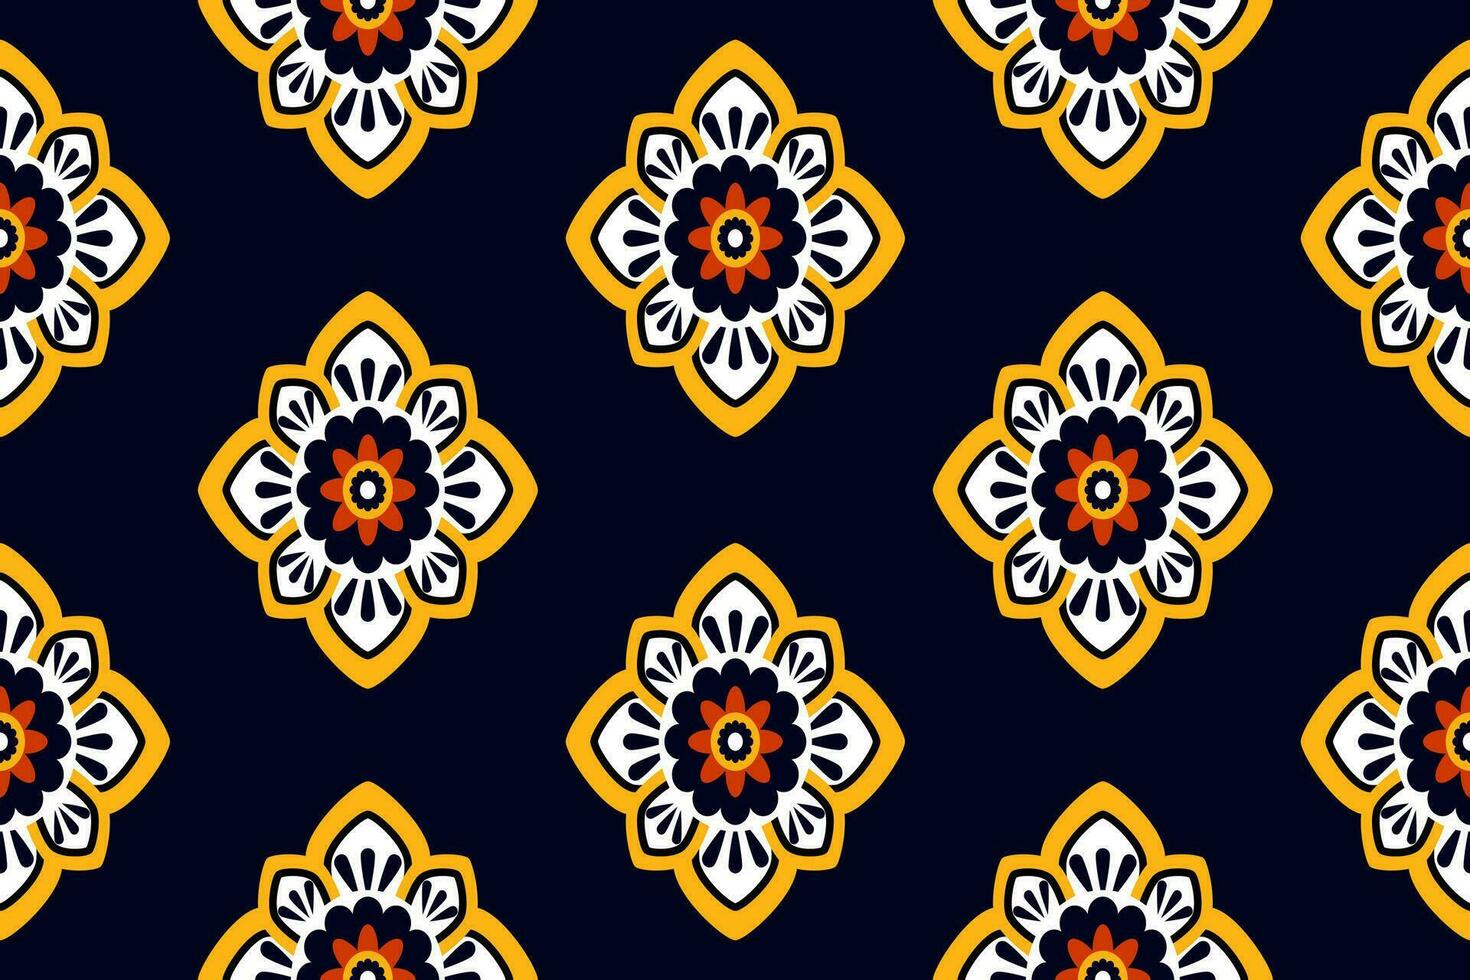 yellow colorful flower pattern chevron art design folk embroidery Aztec geometric art prints design for carpet, wallpaper, clothes, wrap, cloth, cover, black background vector